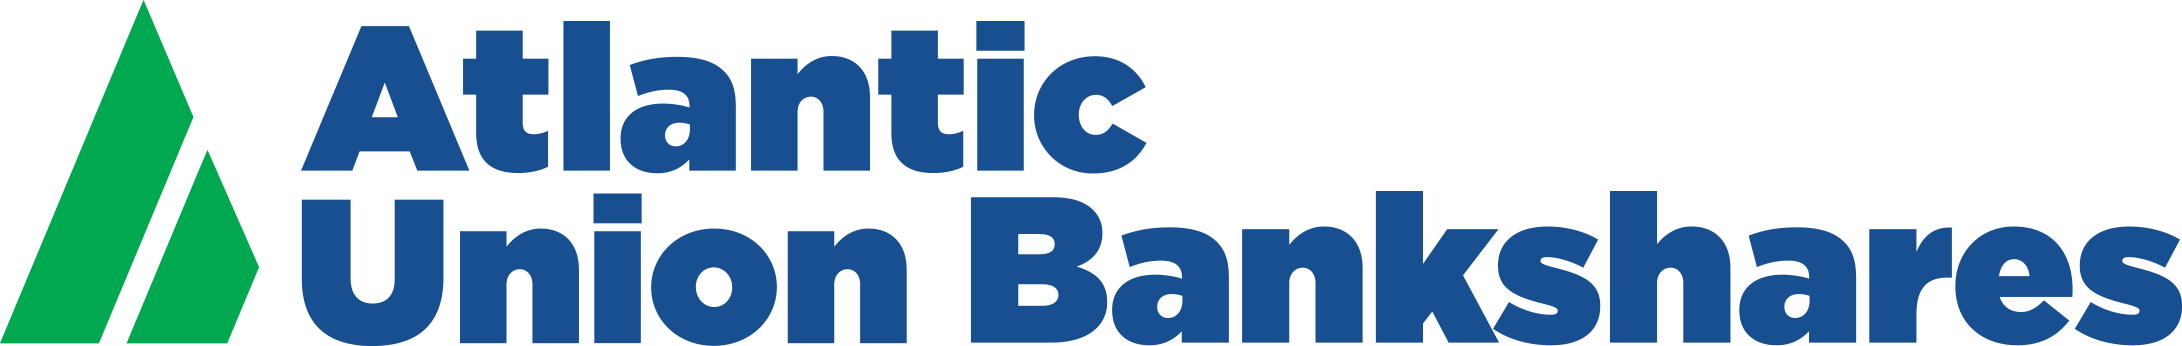 Atlantic Union BanksharesFINAL.png